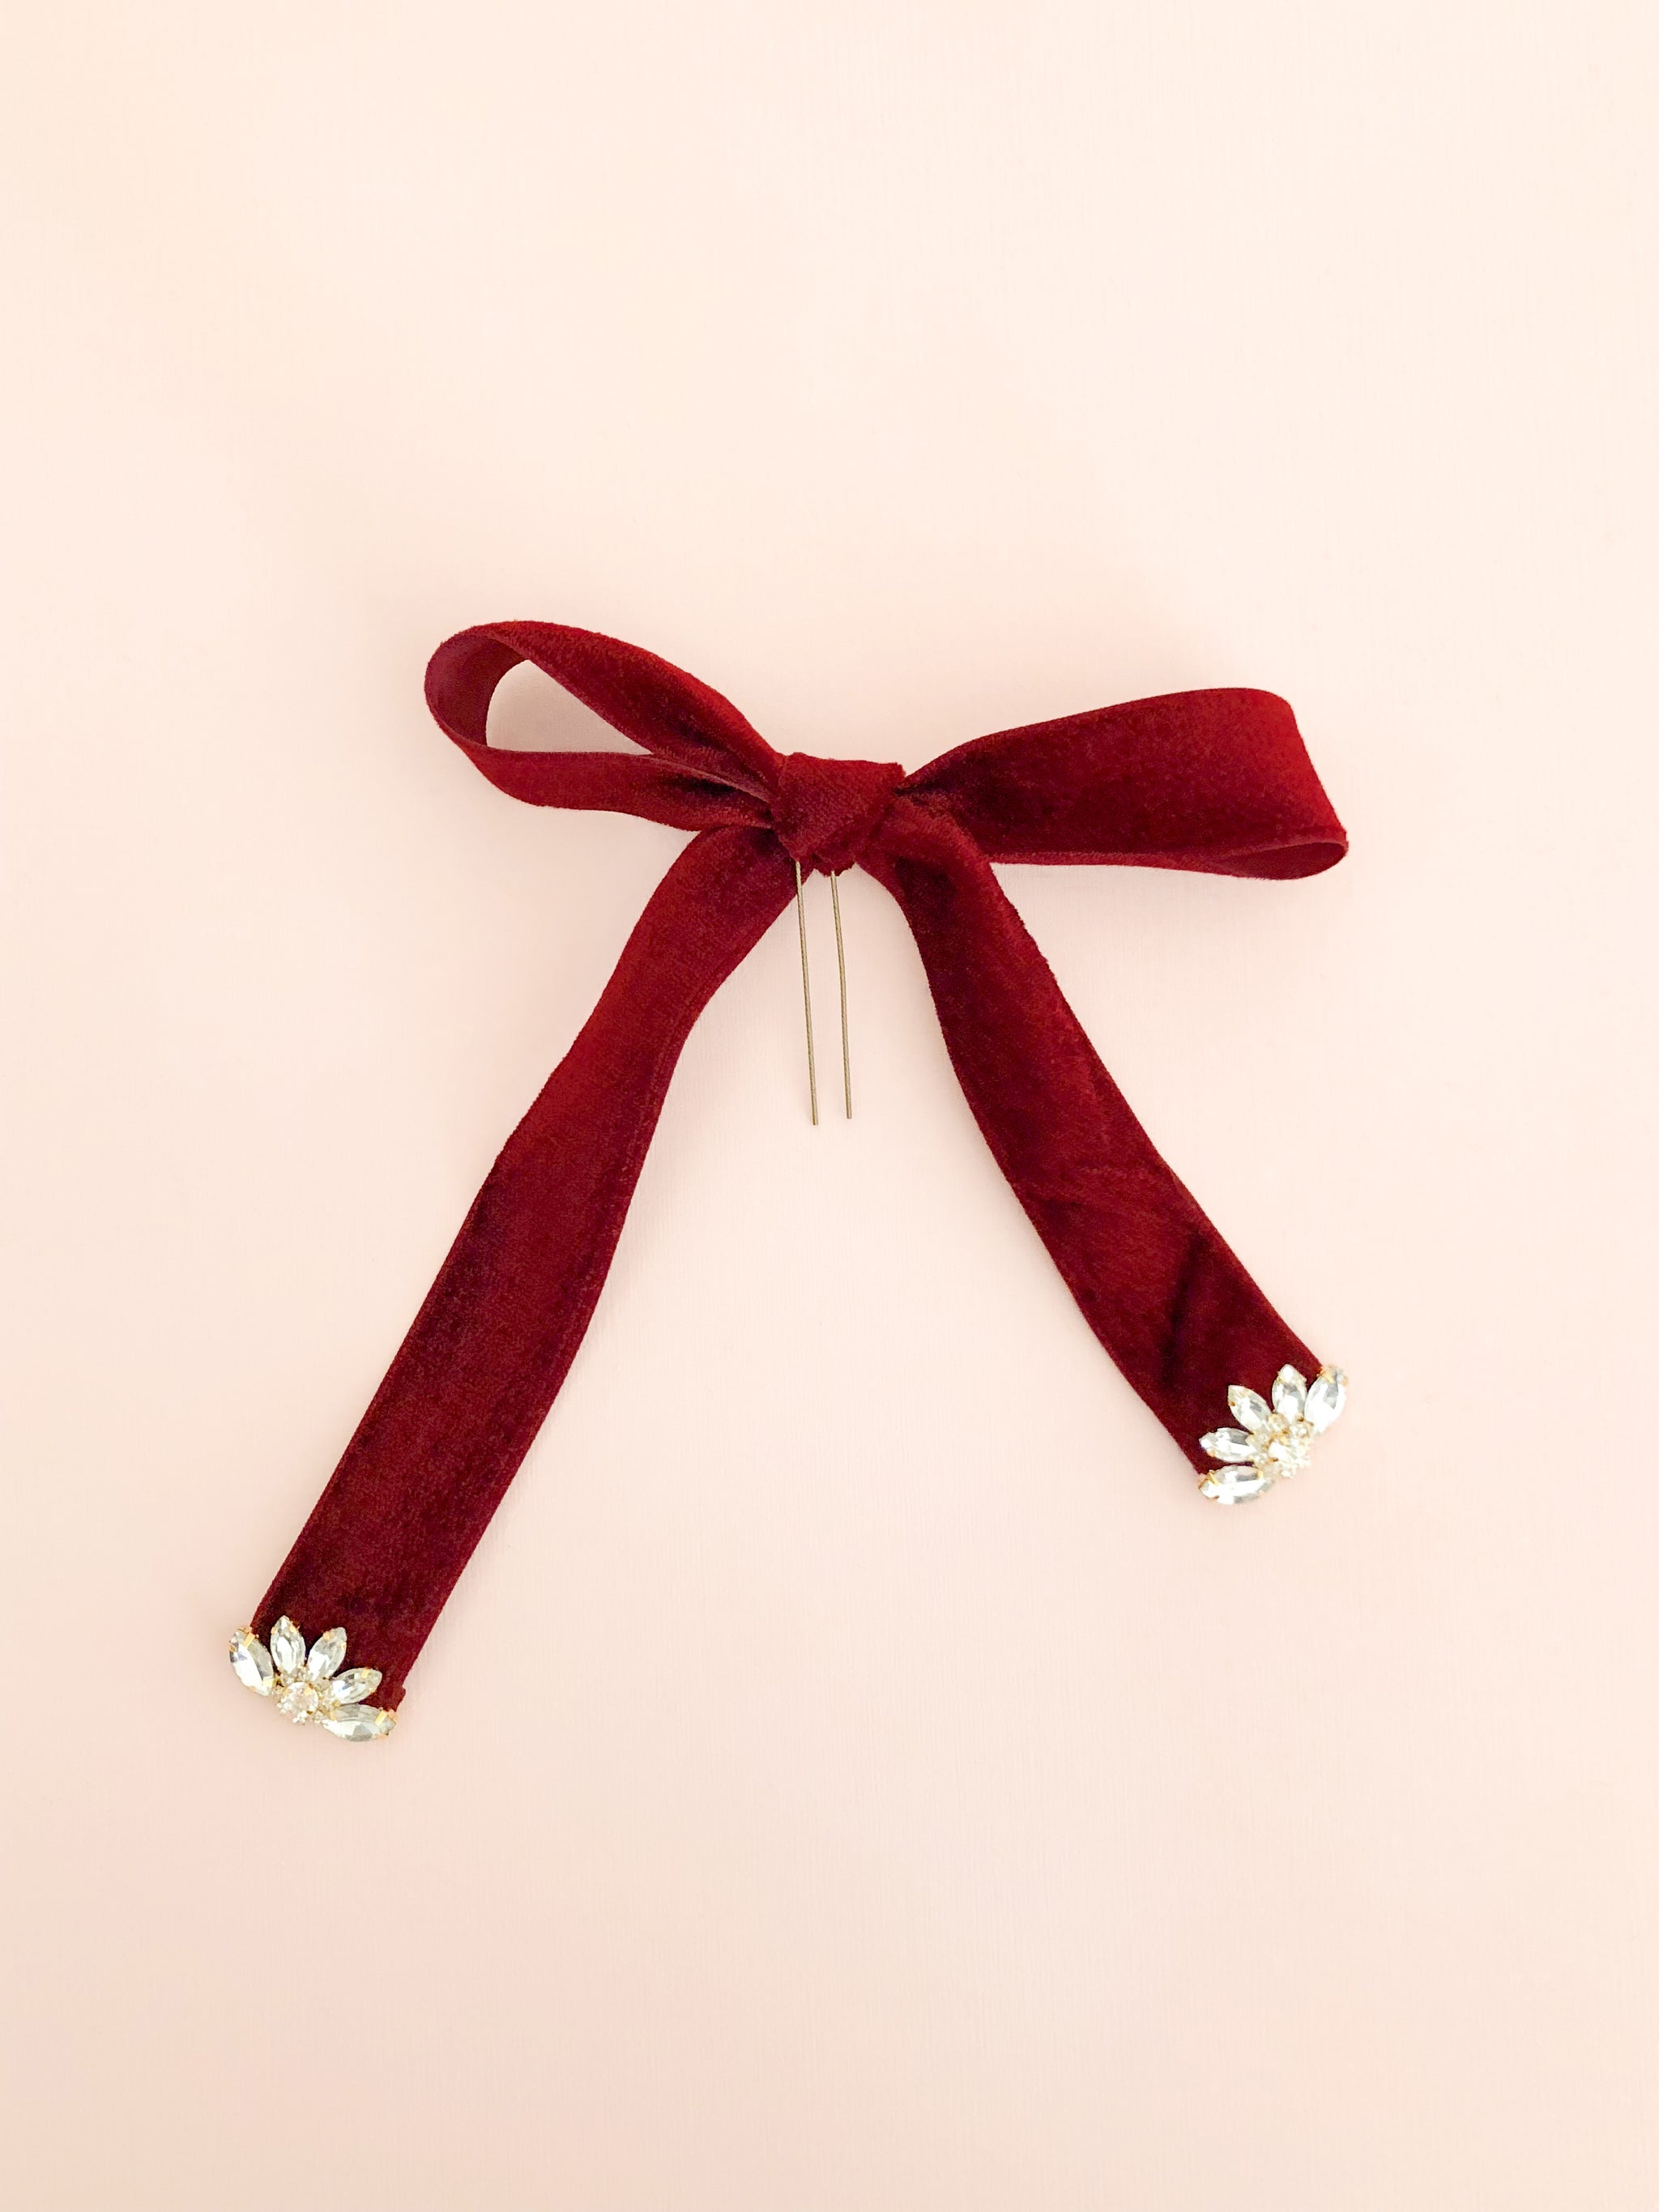 Velvet Ribbon 1 Inch Wide. Ribbon Decoration. Velevt Bows Supplies. Craft  Supplies Hair Bows Supplies 